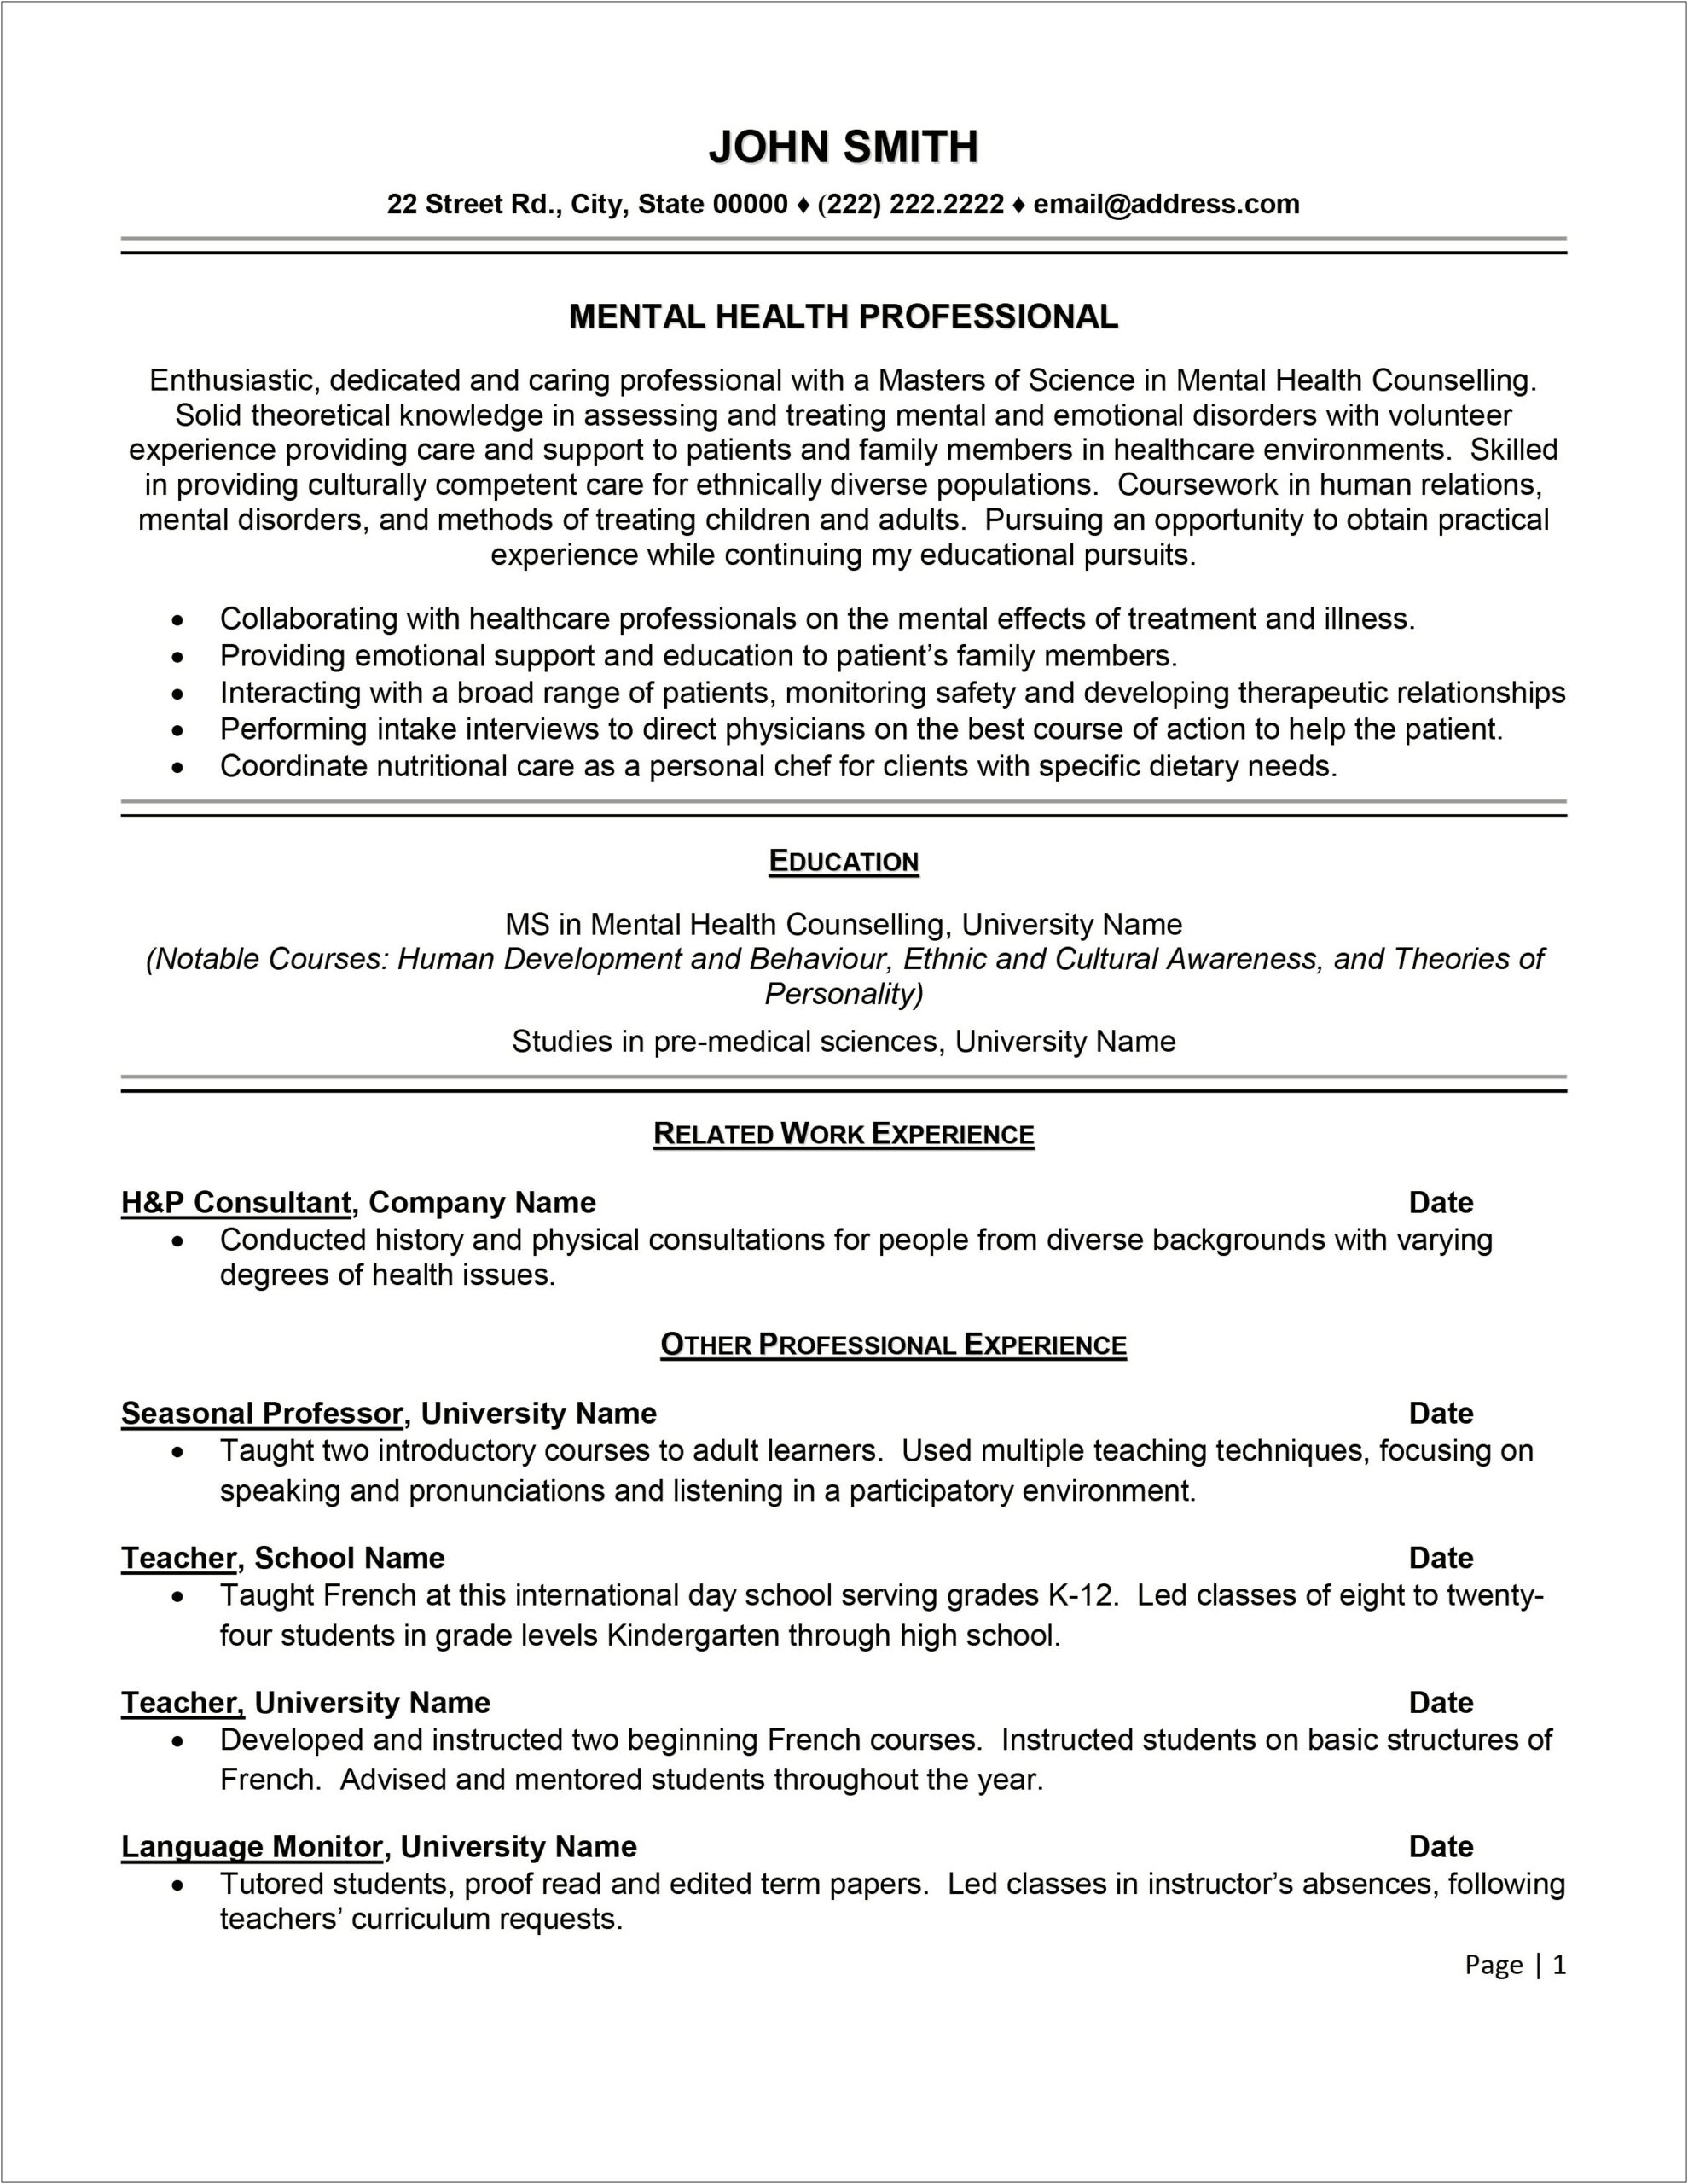 Sample Of Health Professional Resume